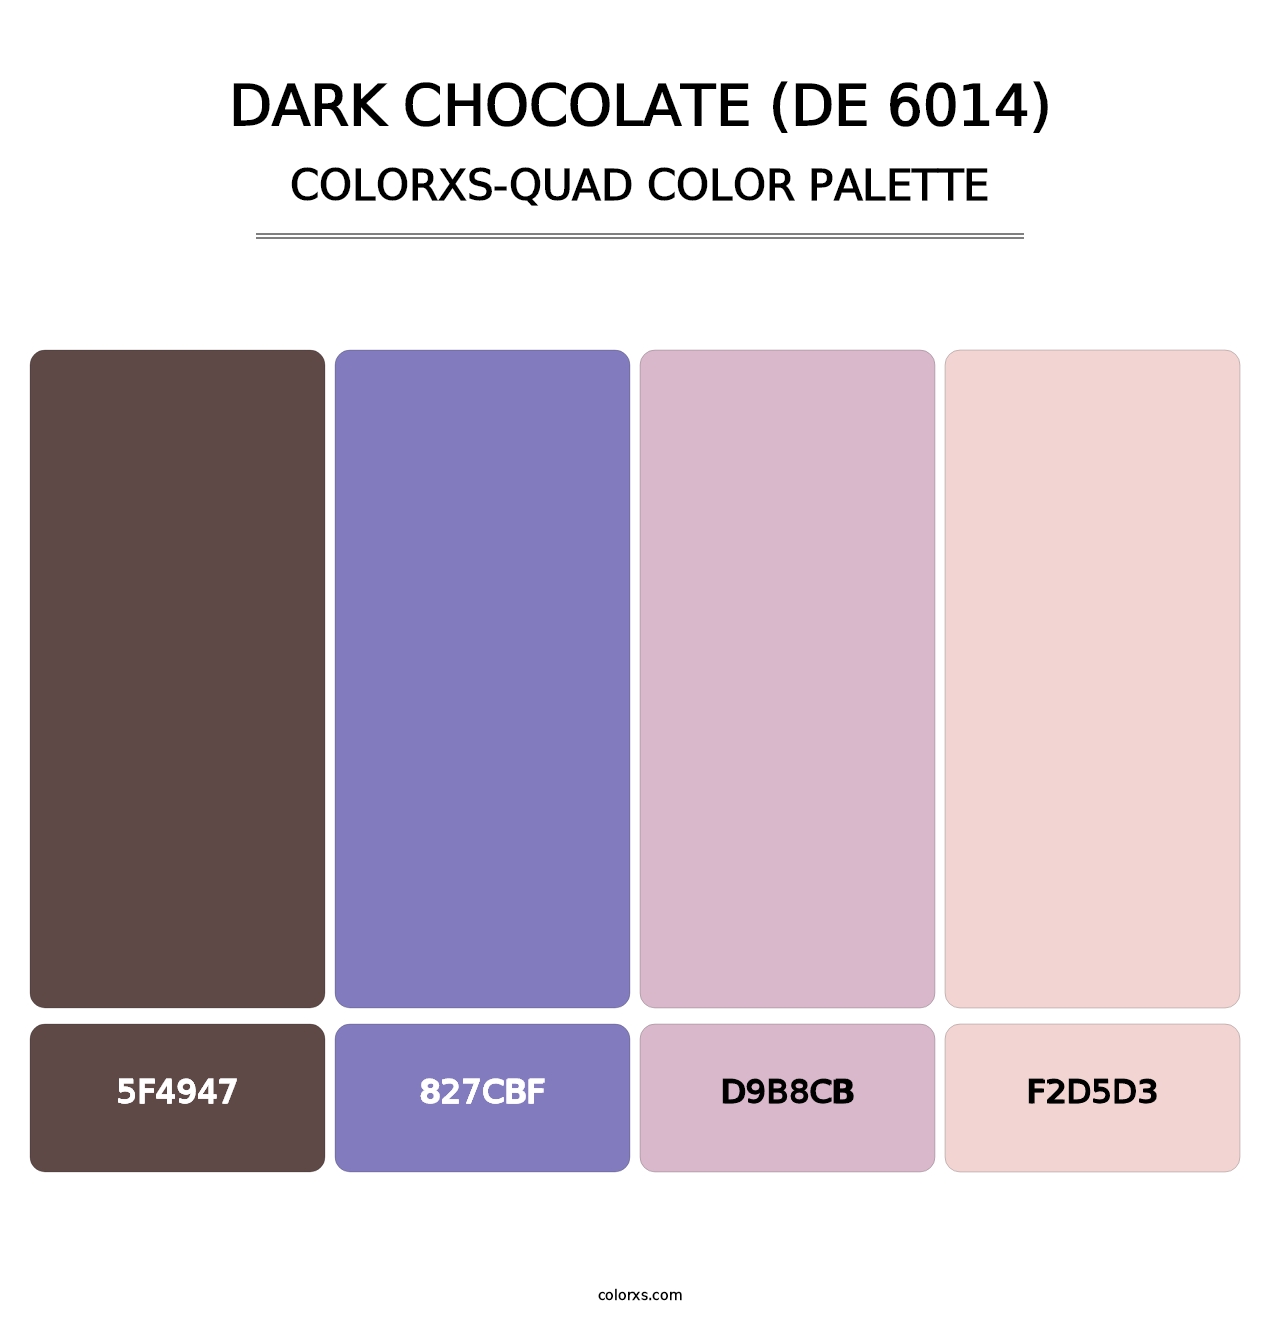 Dark Chocolate (DE 6014) - Colorxs Quad Palette